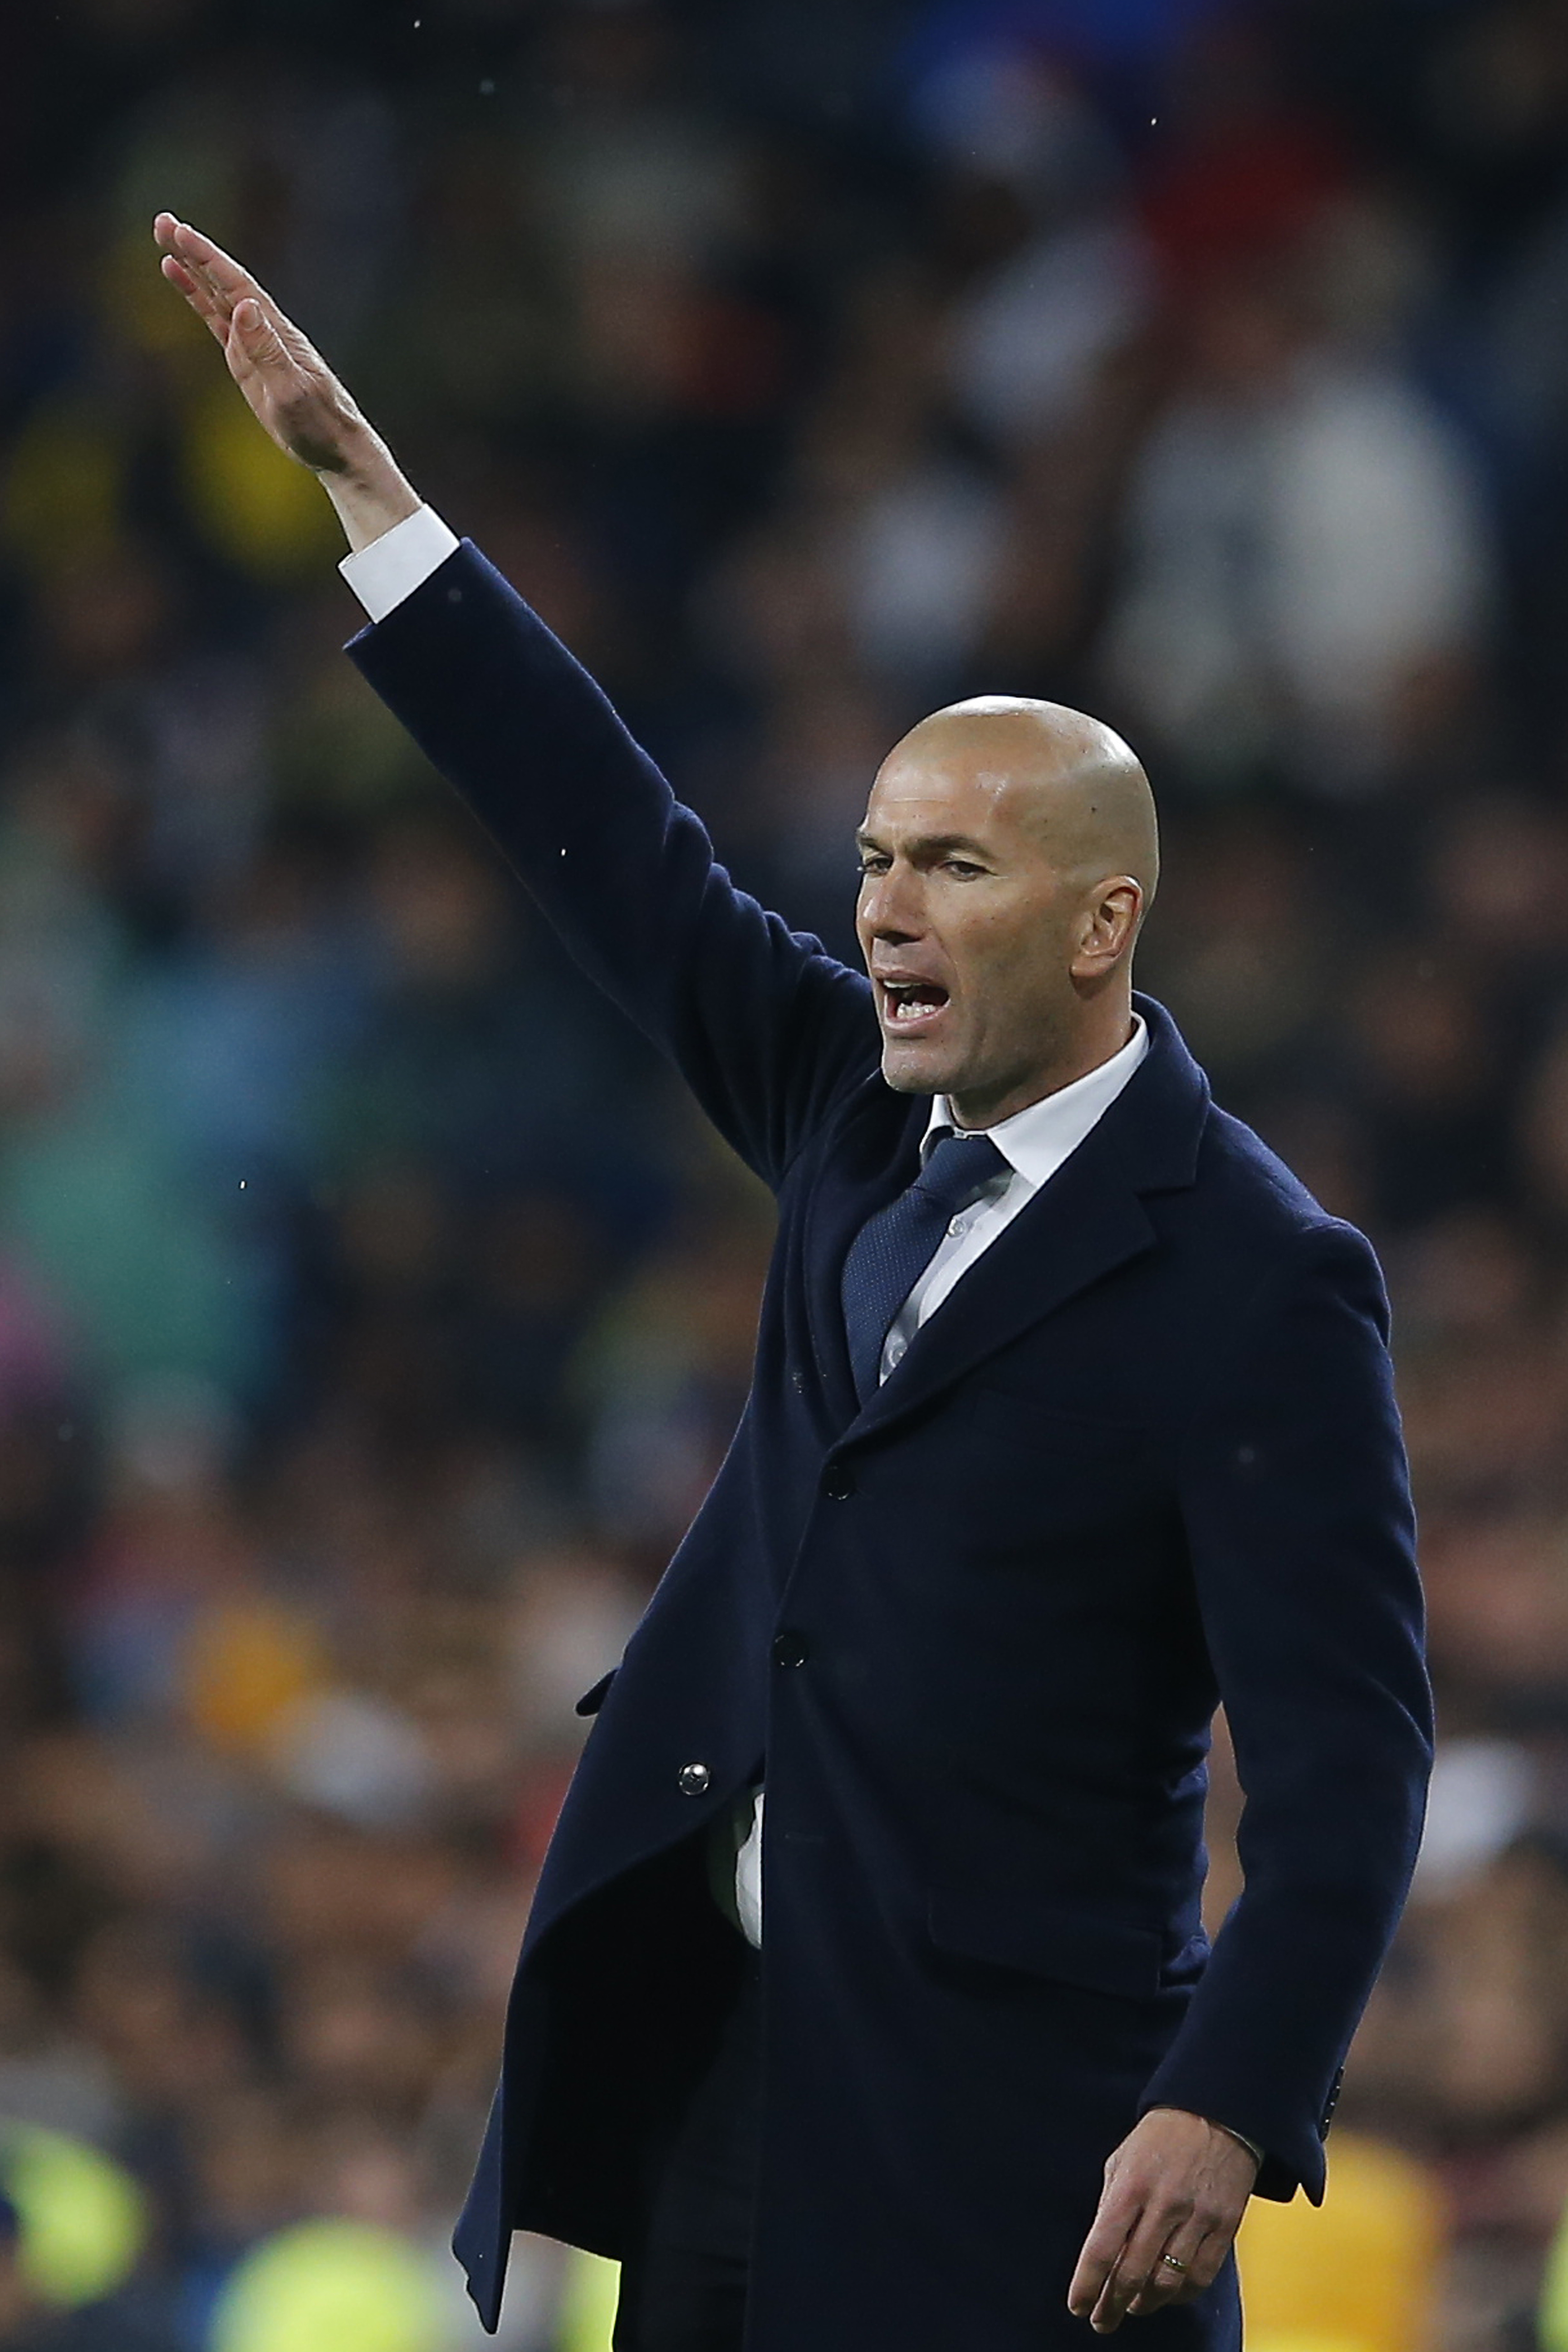 Keeping his cool as coach, Zidane keeps Madrid season alive  thv11.com